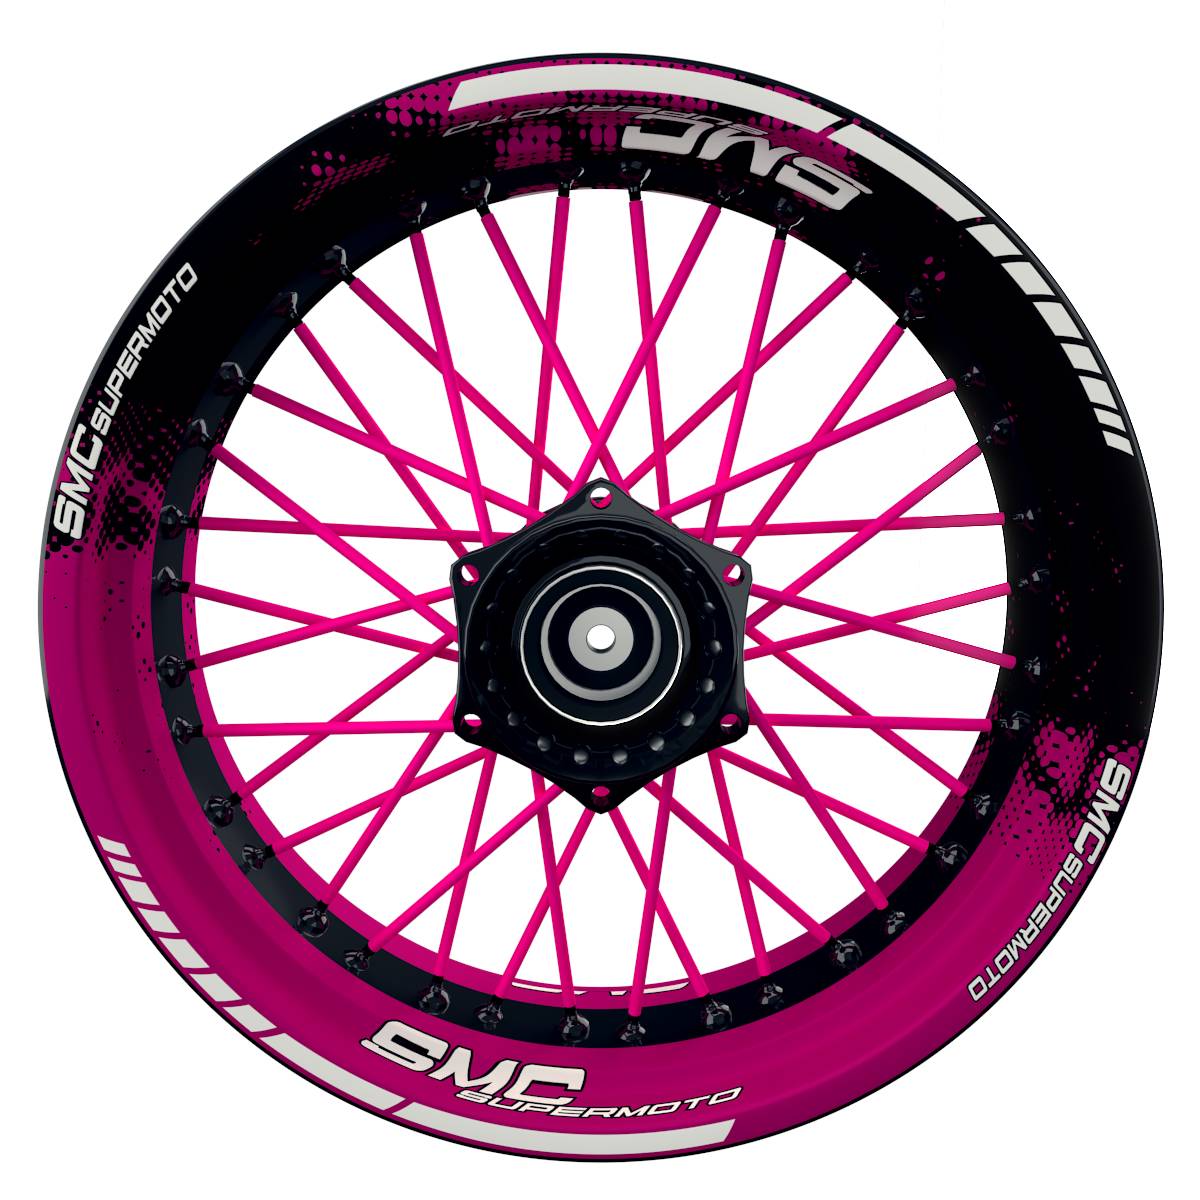 SMC Supermoto Dots schwarz pink Wheelsticker Felgenaufkleber